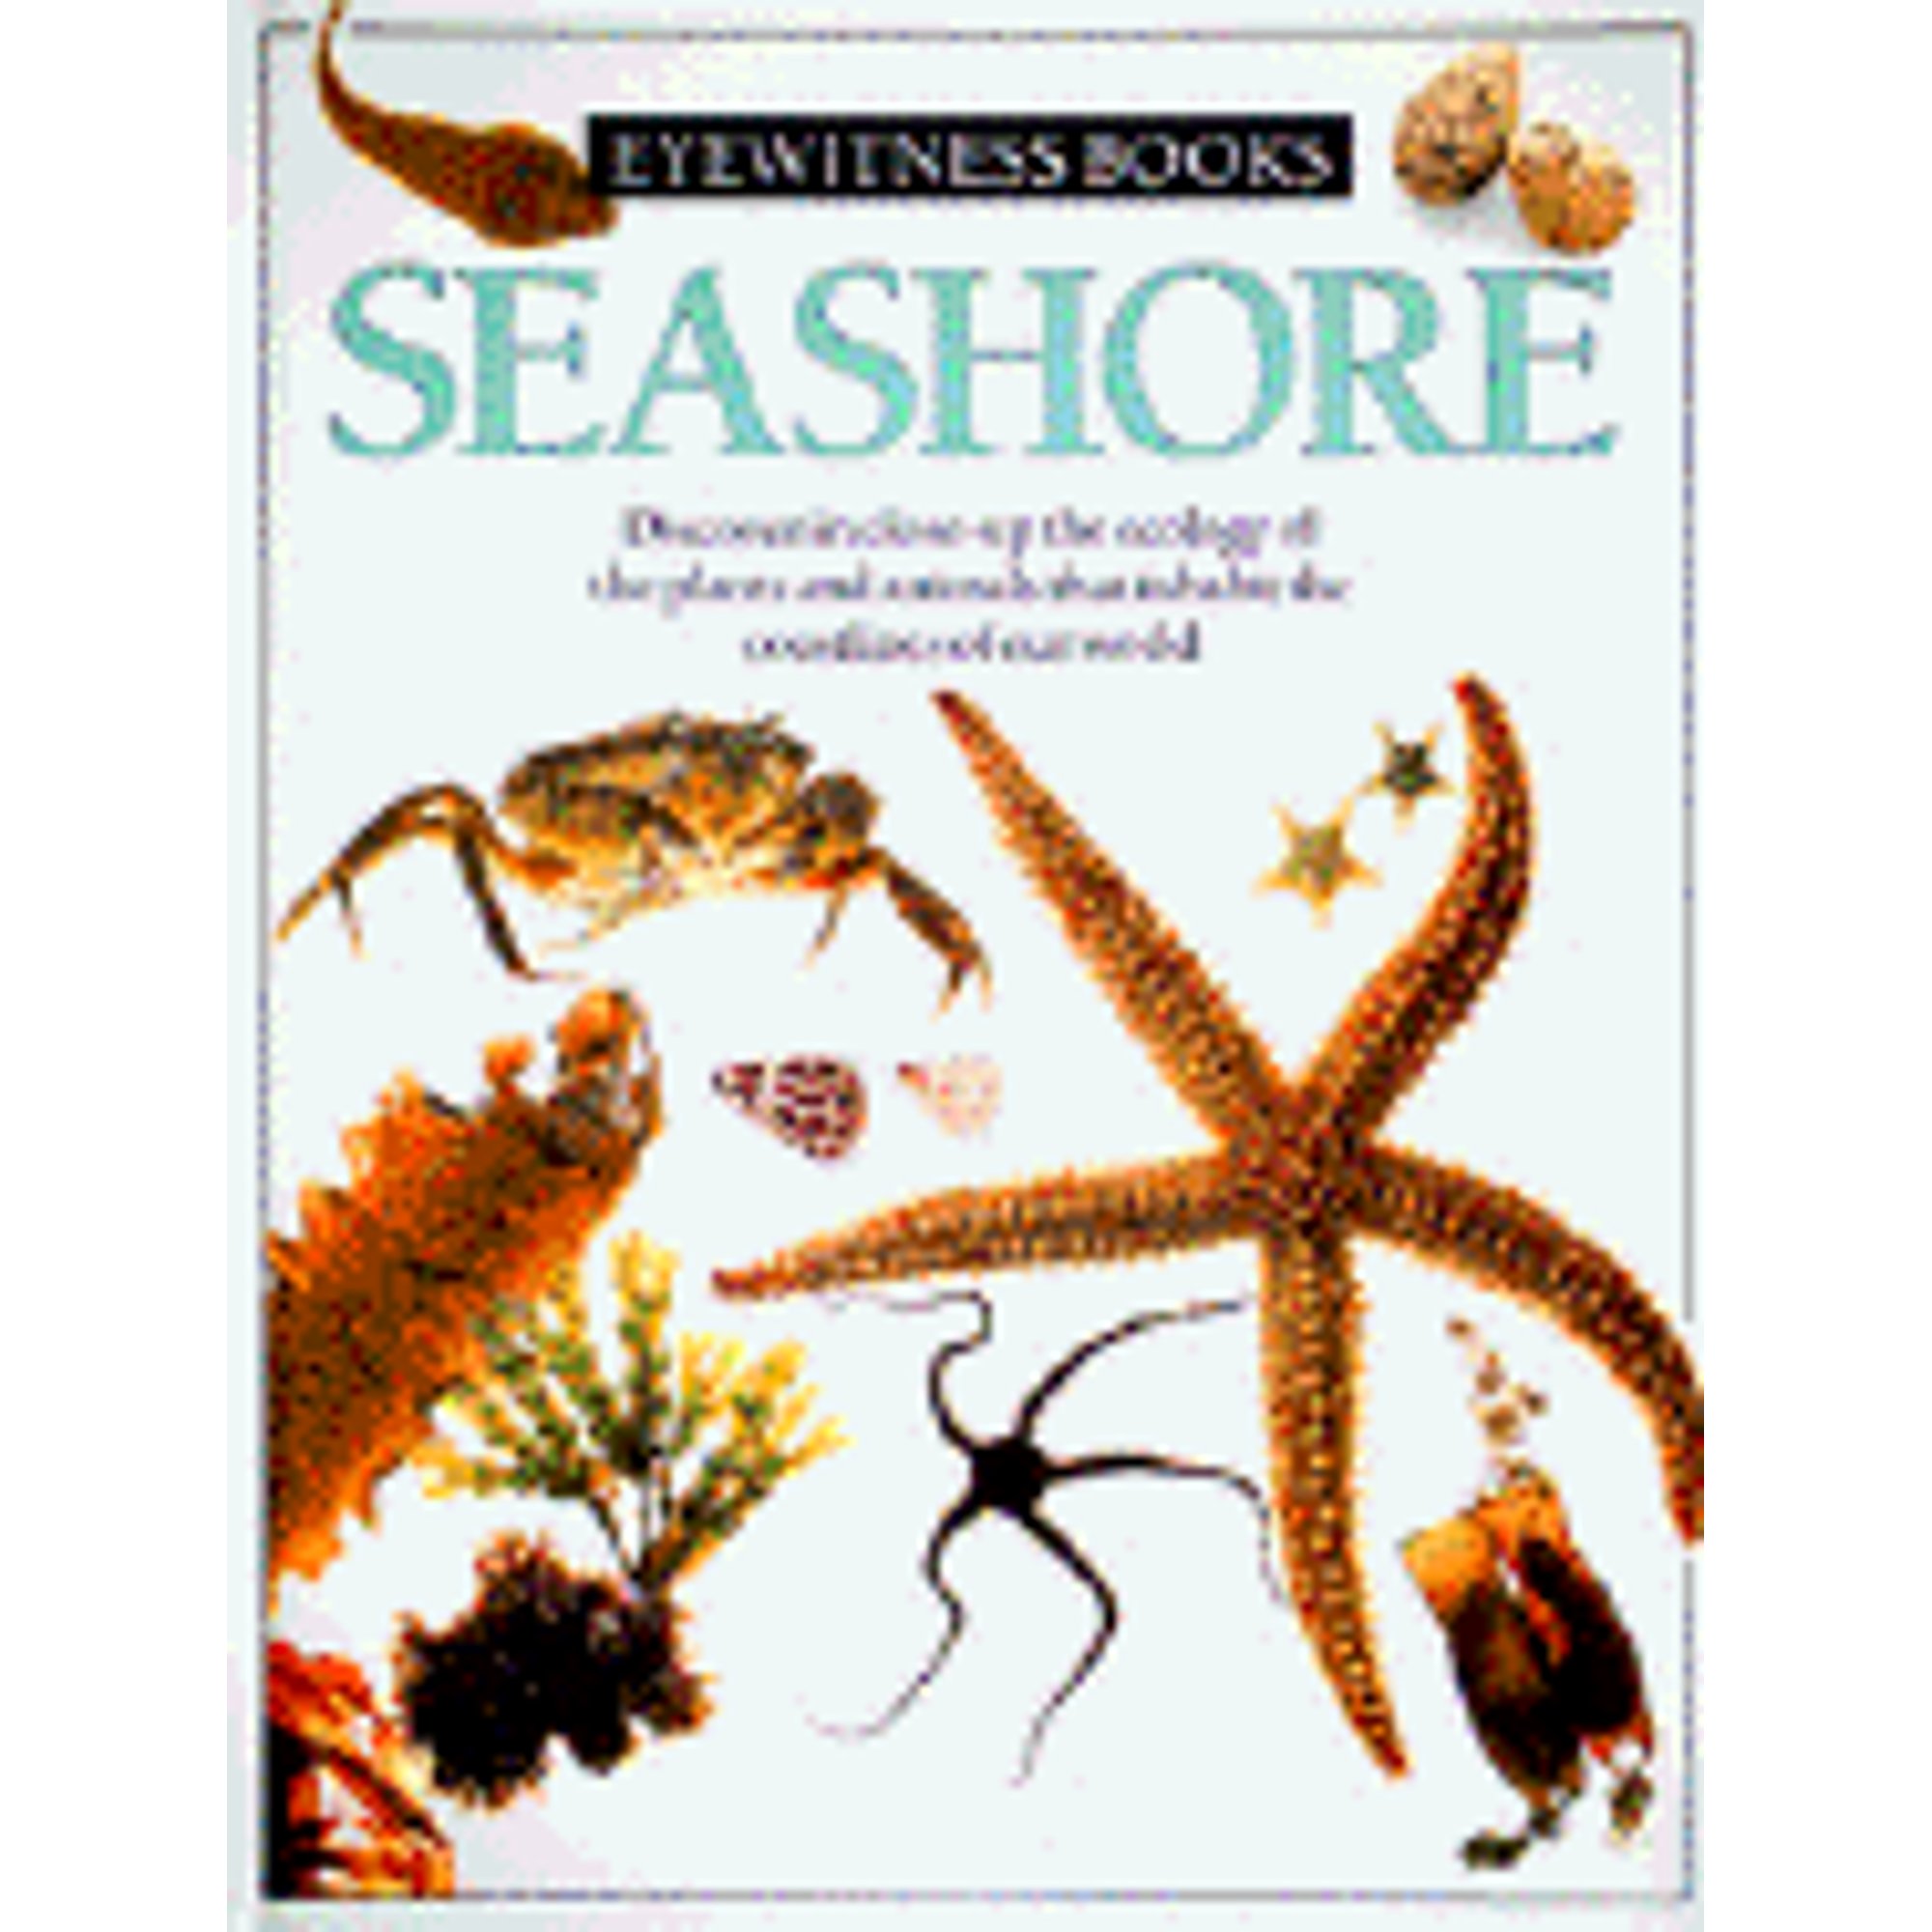 Seashore (Hardcover) by Steve Parker, Dorling Kindersley Publishing, Dave King - image 1 of 1